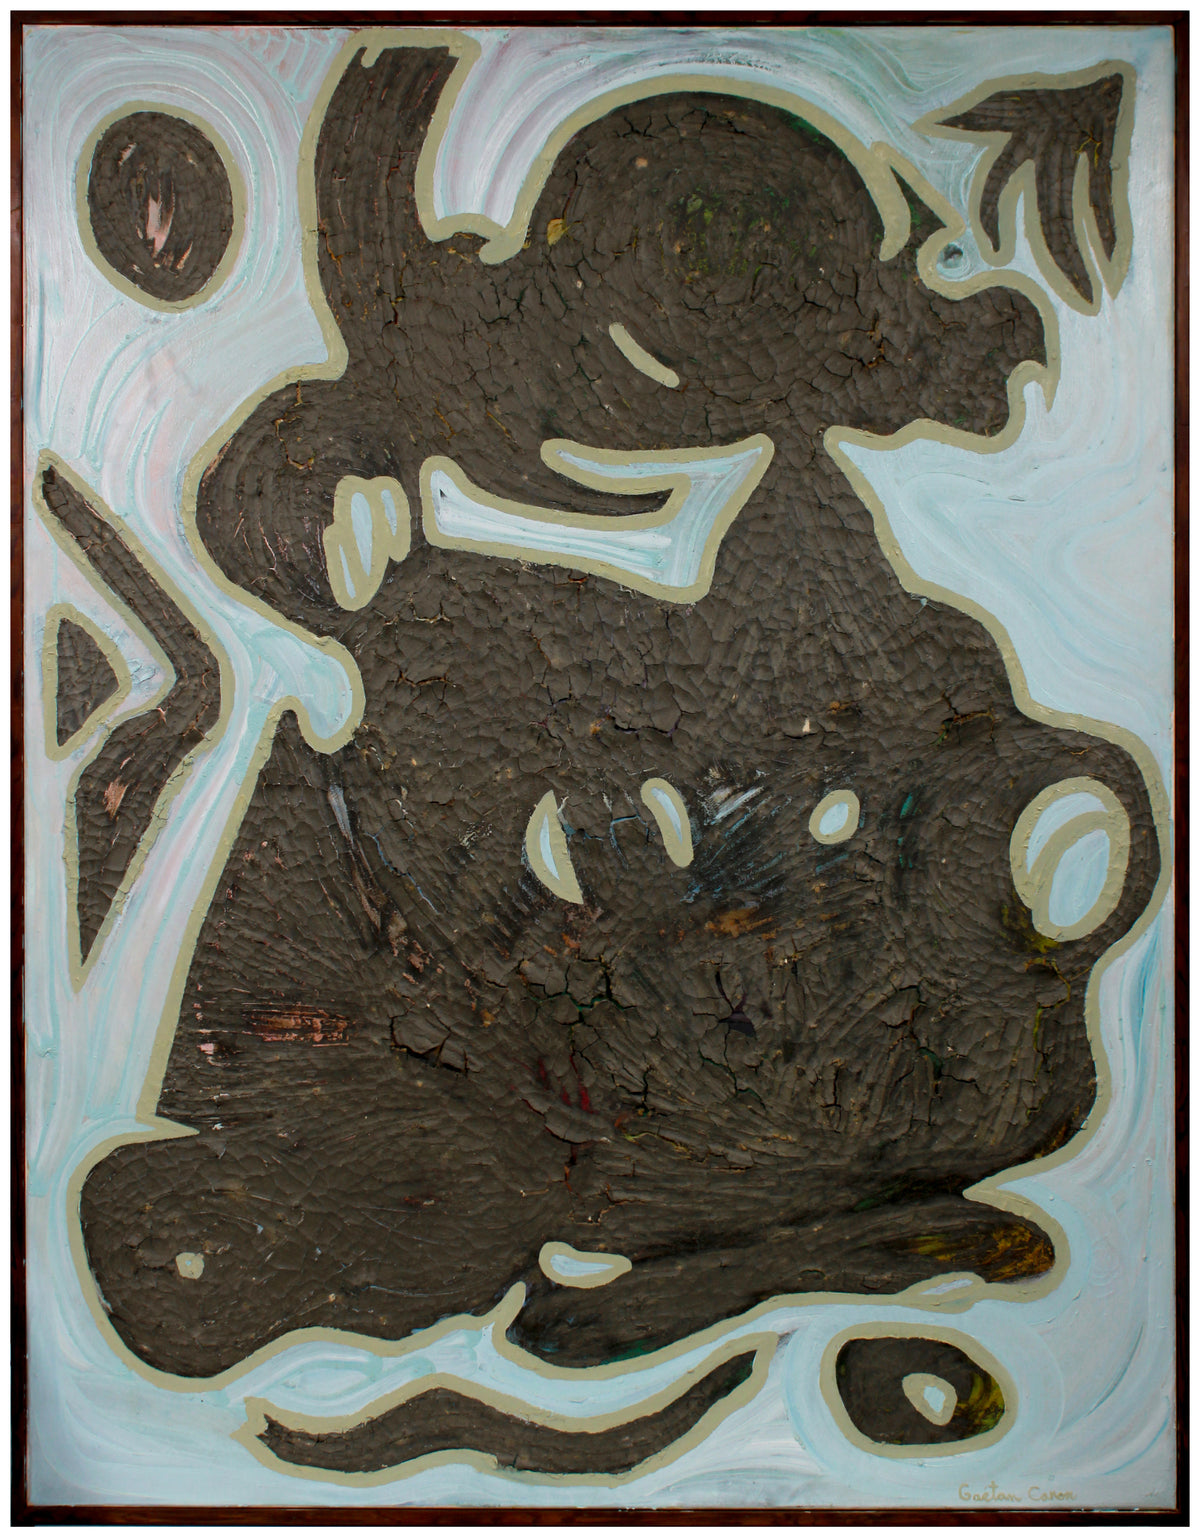 &lt;i&gt;Indigenous Icon - Abstraction&lt;/i&gt; &lt;br&gt;2019 Oil Painting &amp; Clay Collage &lt;br&gt;&lt;br&gt;#B0651